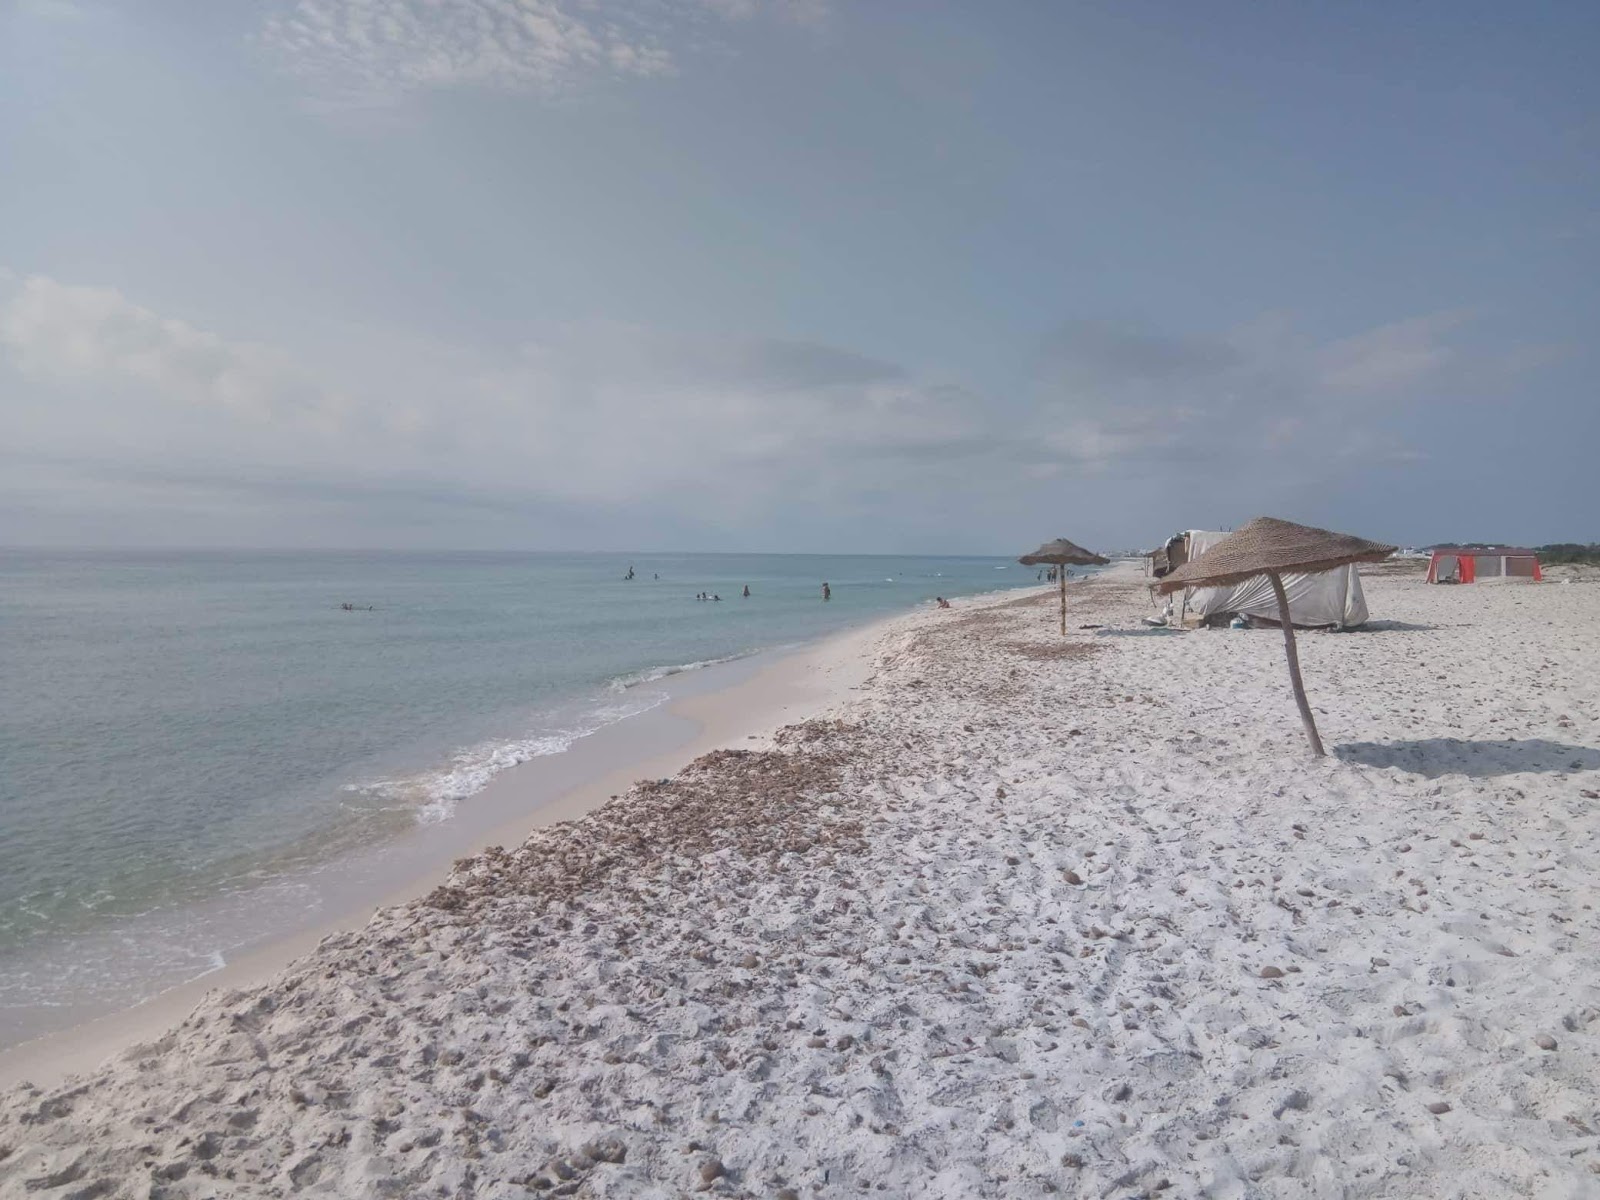 Fotografie cu EL Mrigueb Beach - locul popular printre cunoscătorii de relaxare